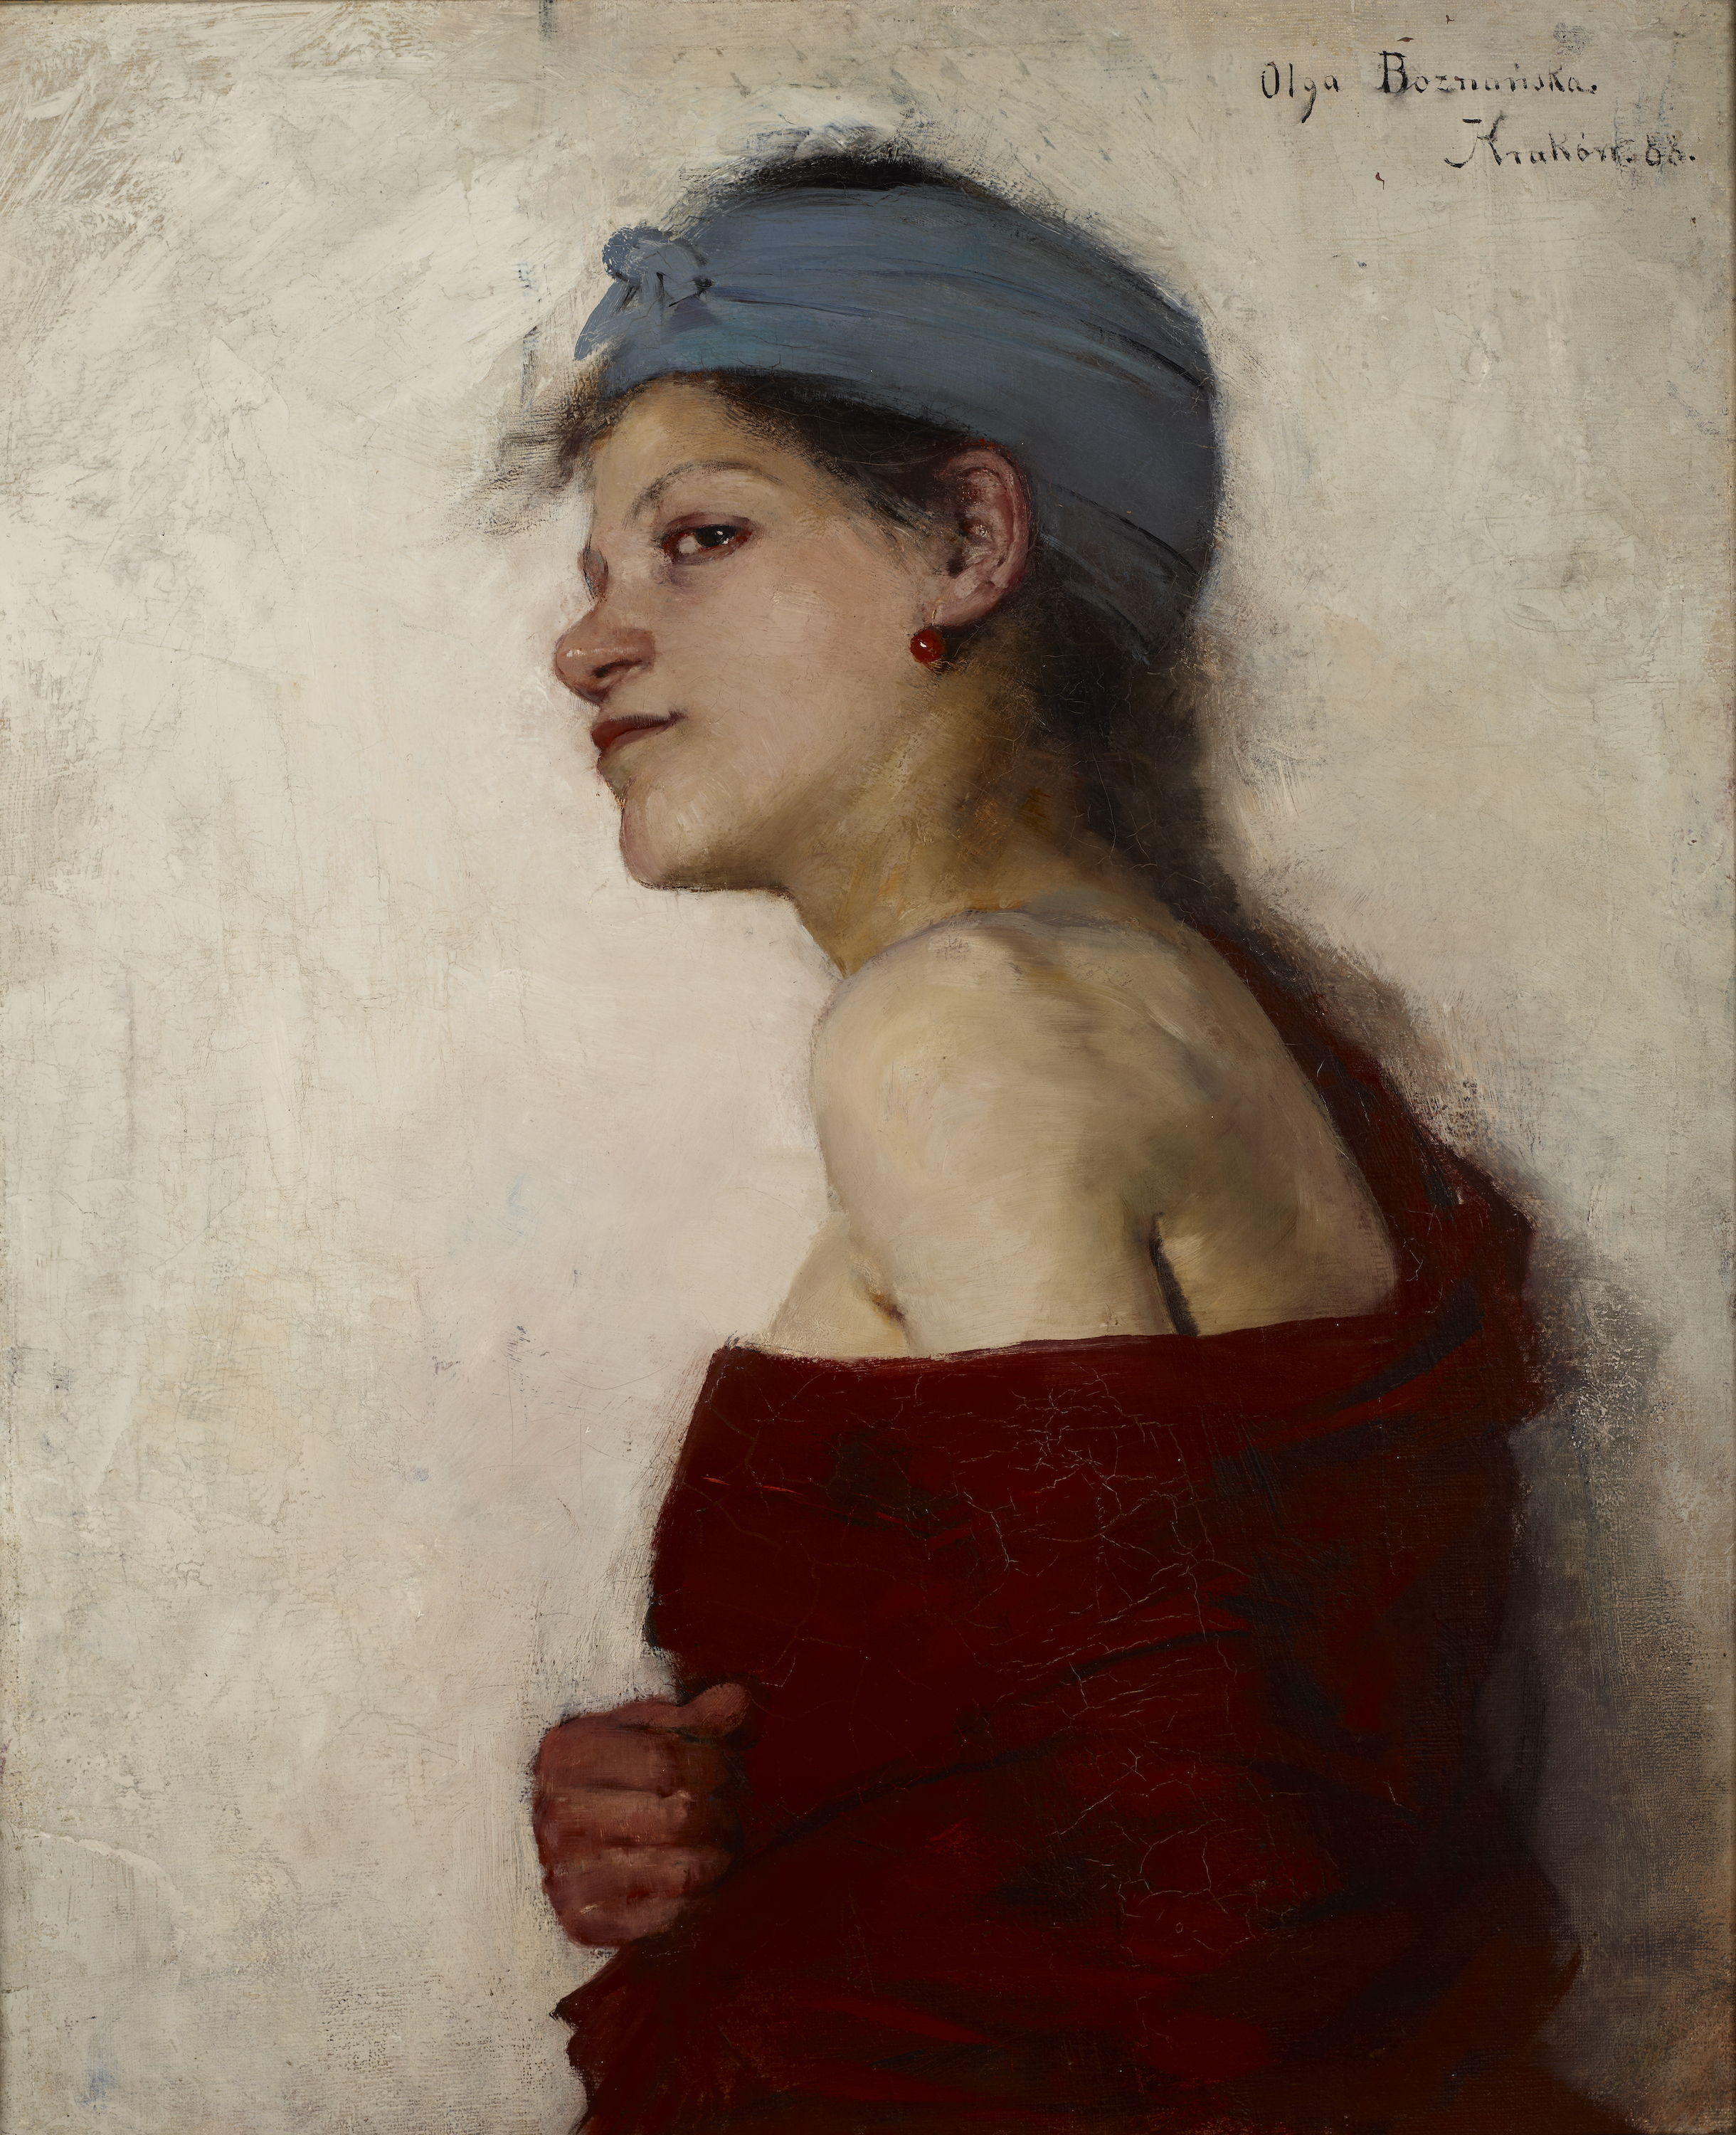 Portret van een vrouw (Zigeuneres) by Olga Boznańska - 1888 